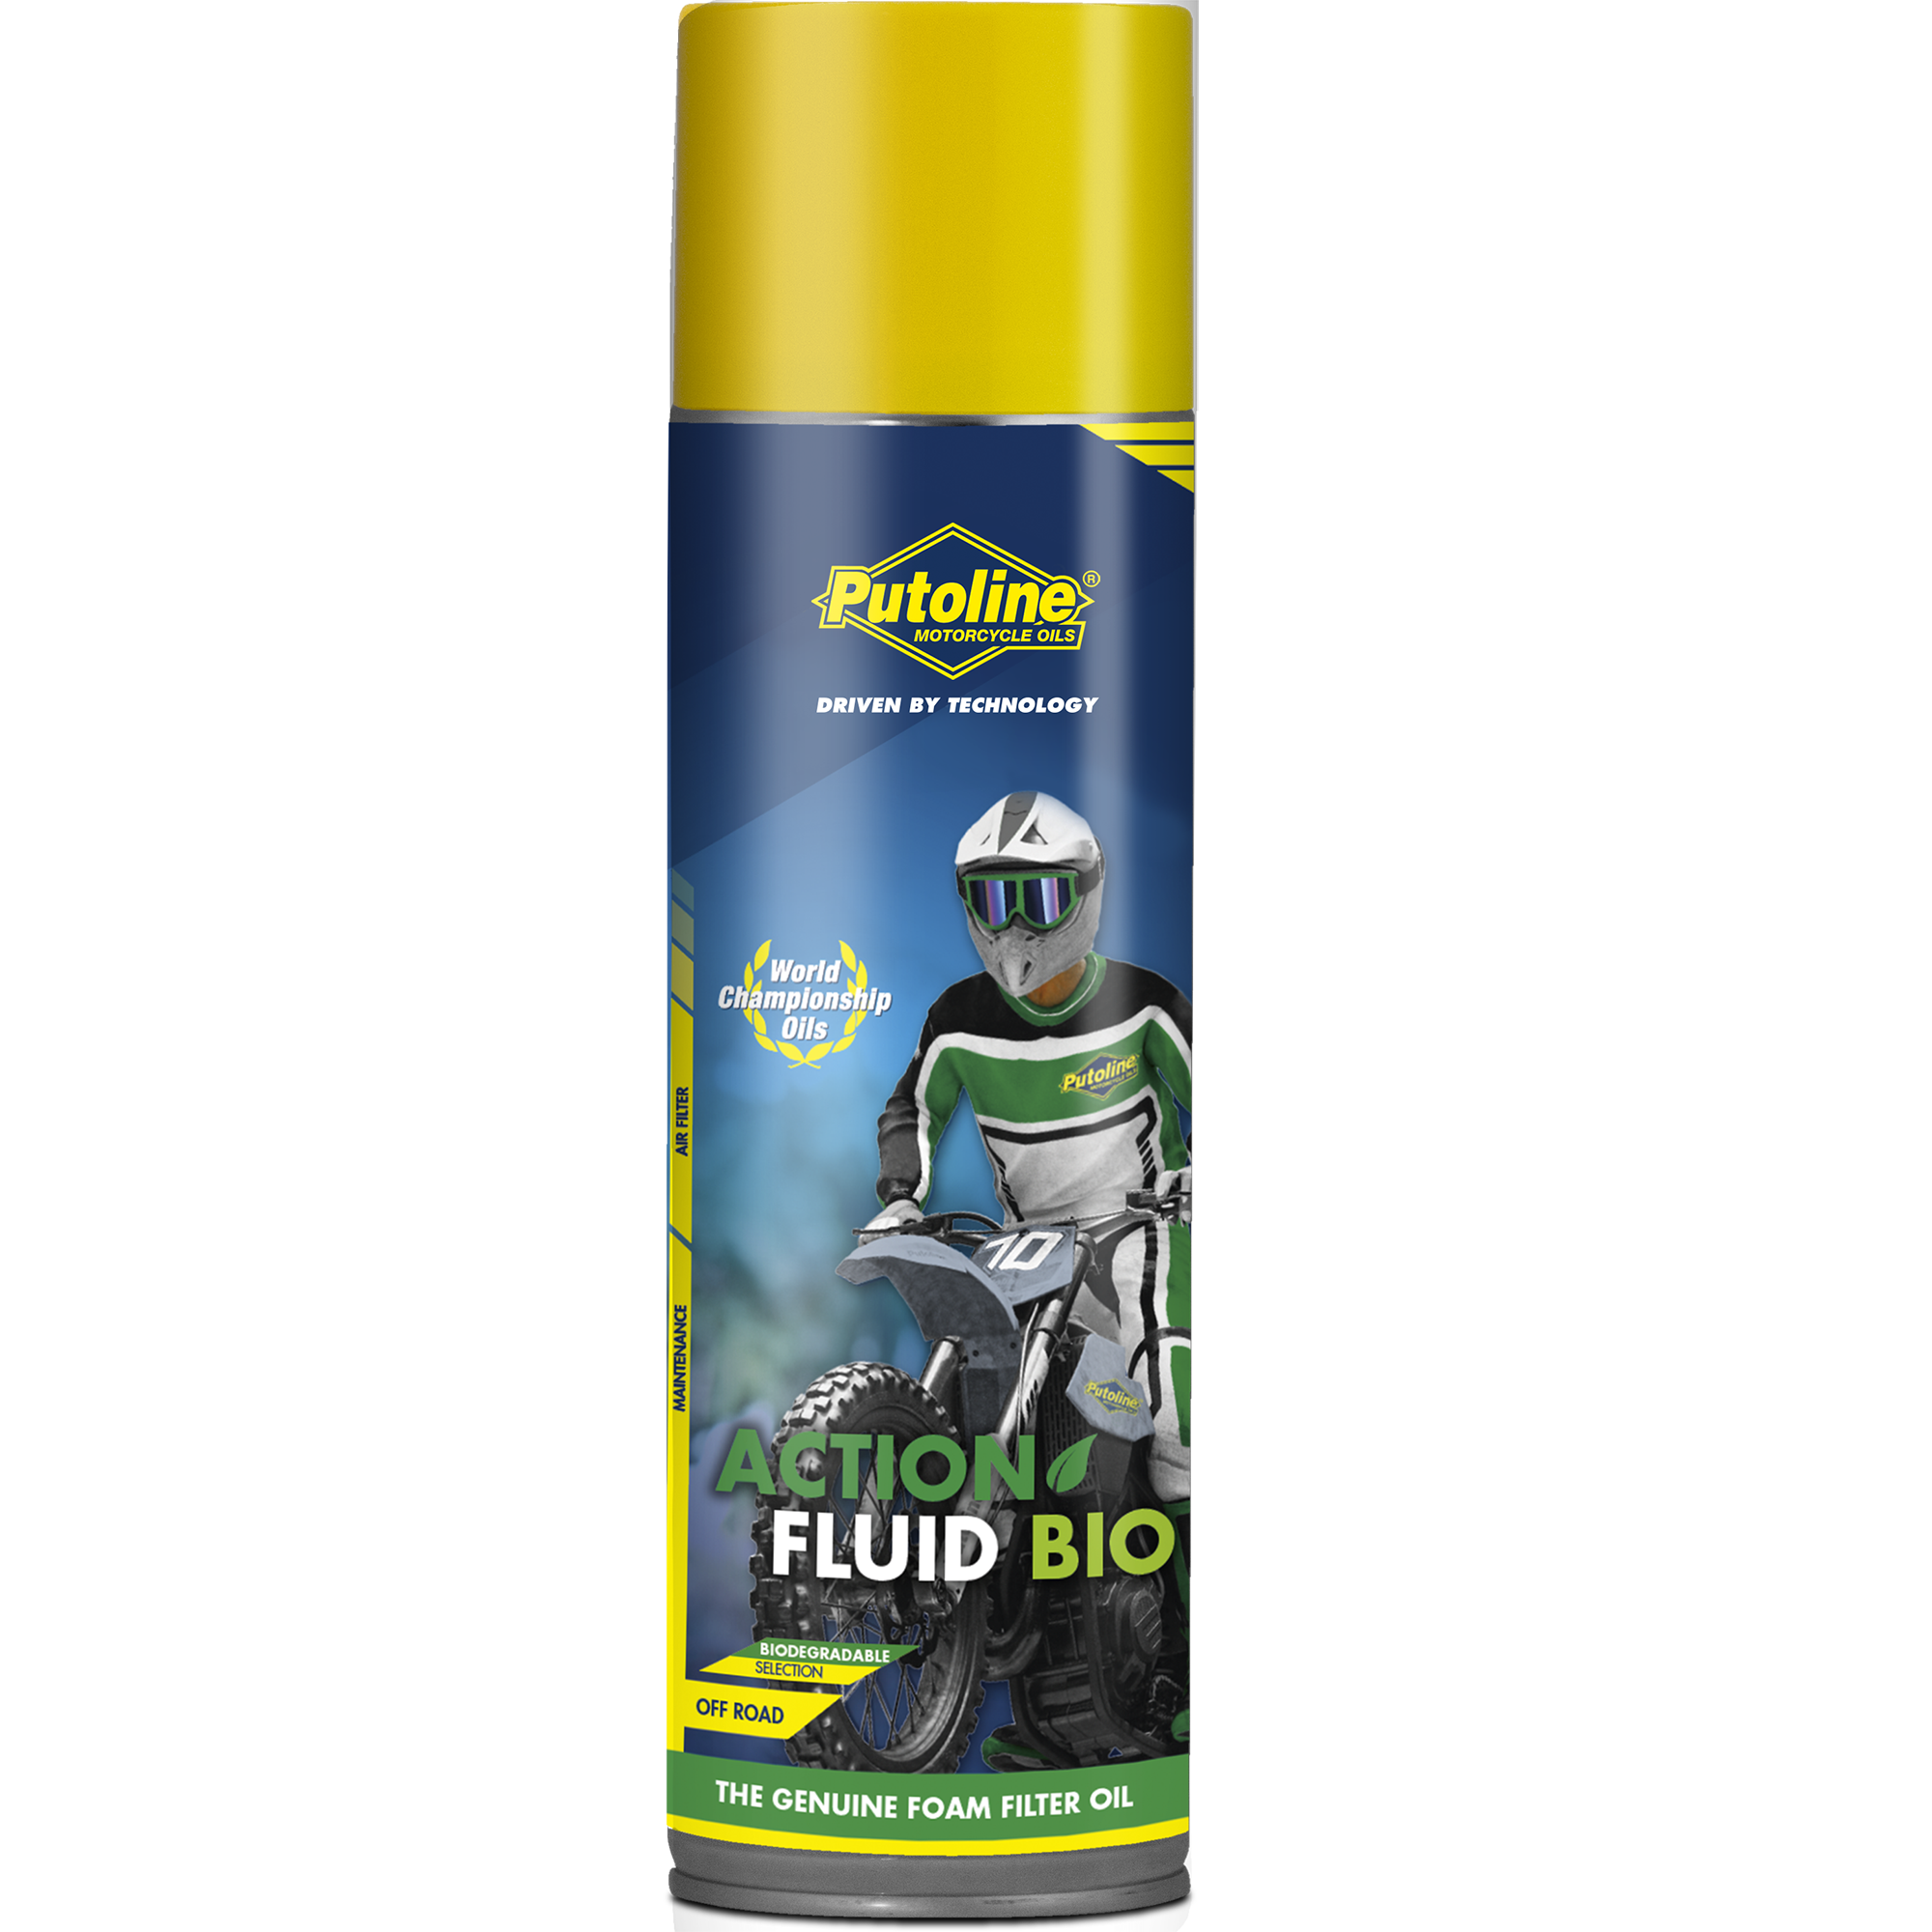 Putoline Action Fluid Bio, 600 ml